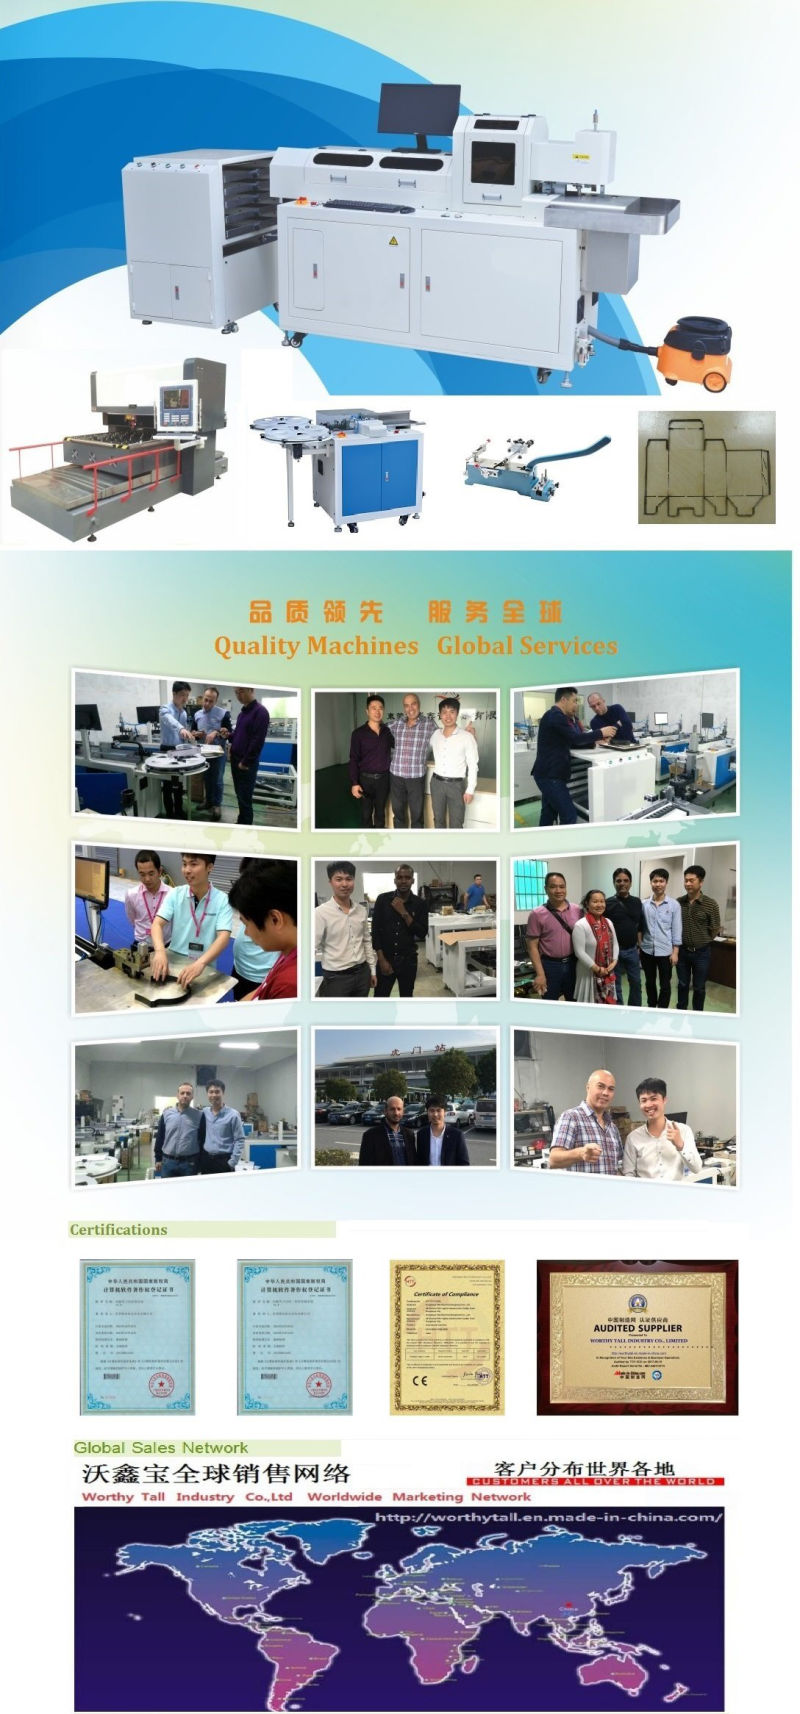 China Factory Direct Sale Price 600watt Die Board Laser Cutting Machine CO2